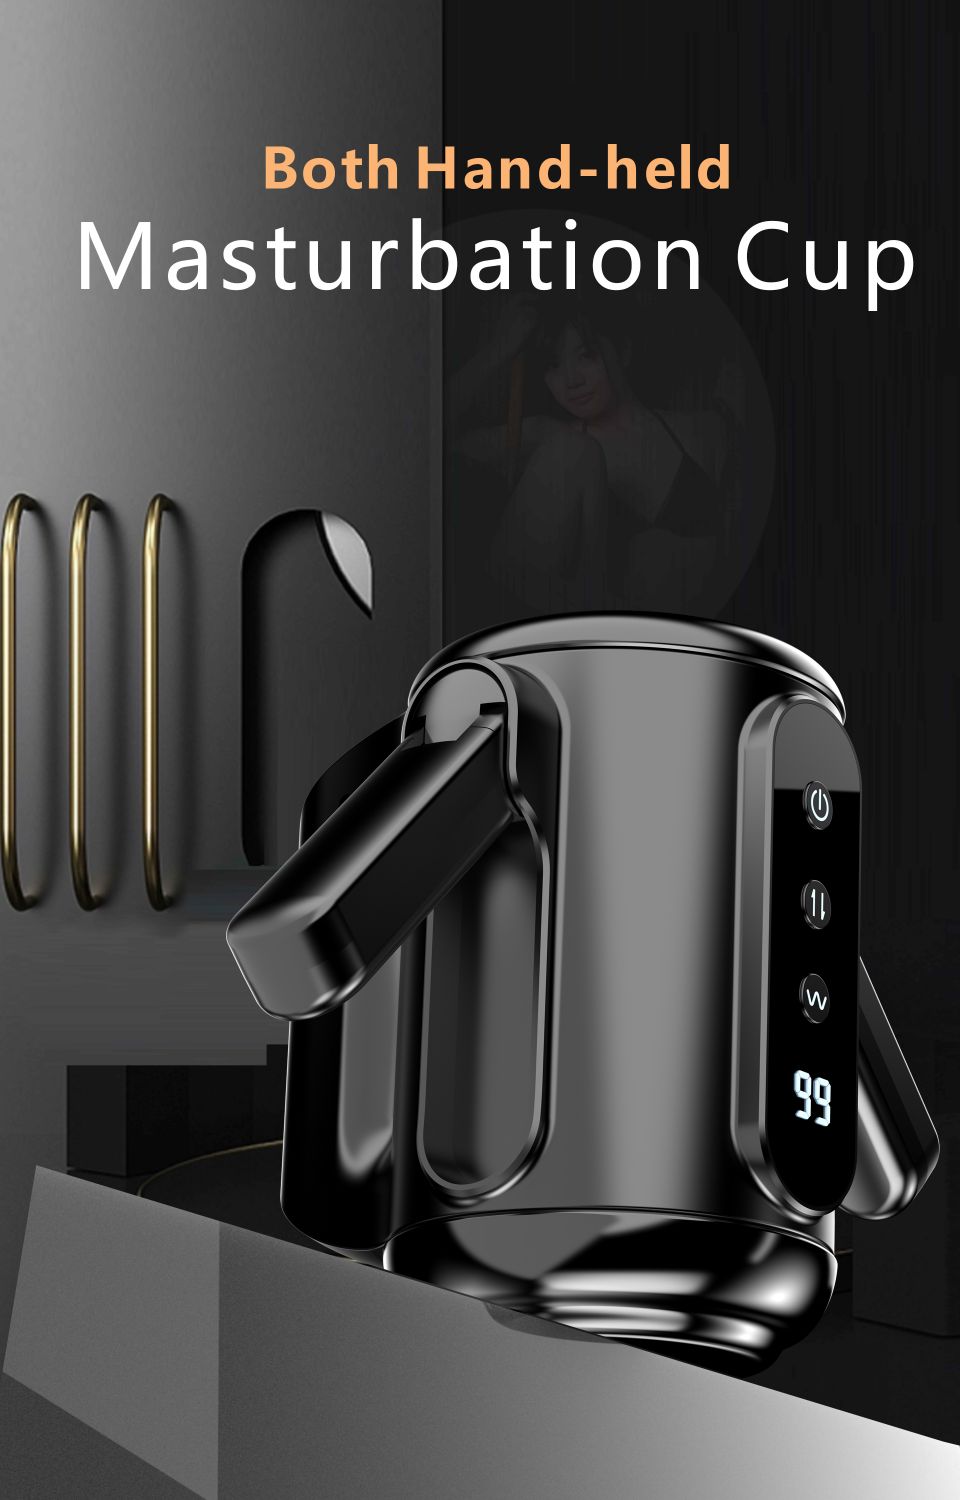 Handheld Masturbator with 6 Vibrating Thrusting Modes 3 Speeds Double Insertable Male Masturbation Cup